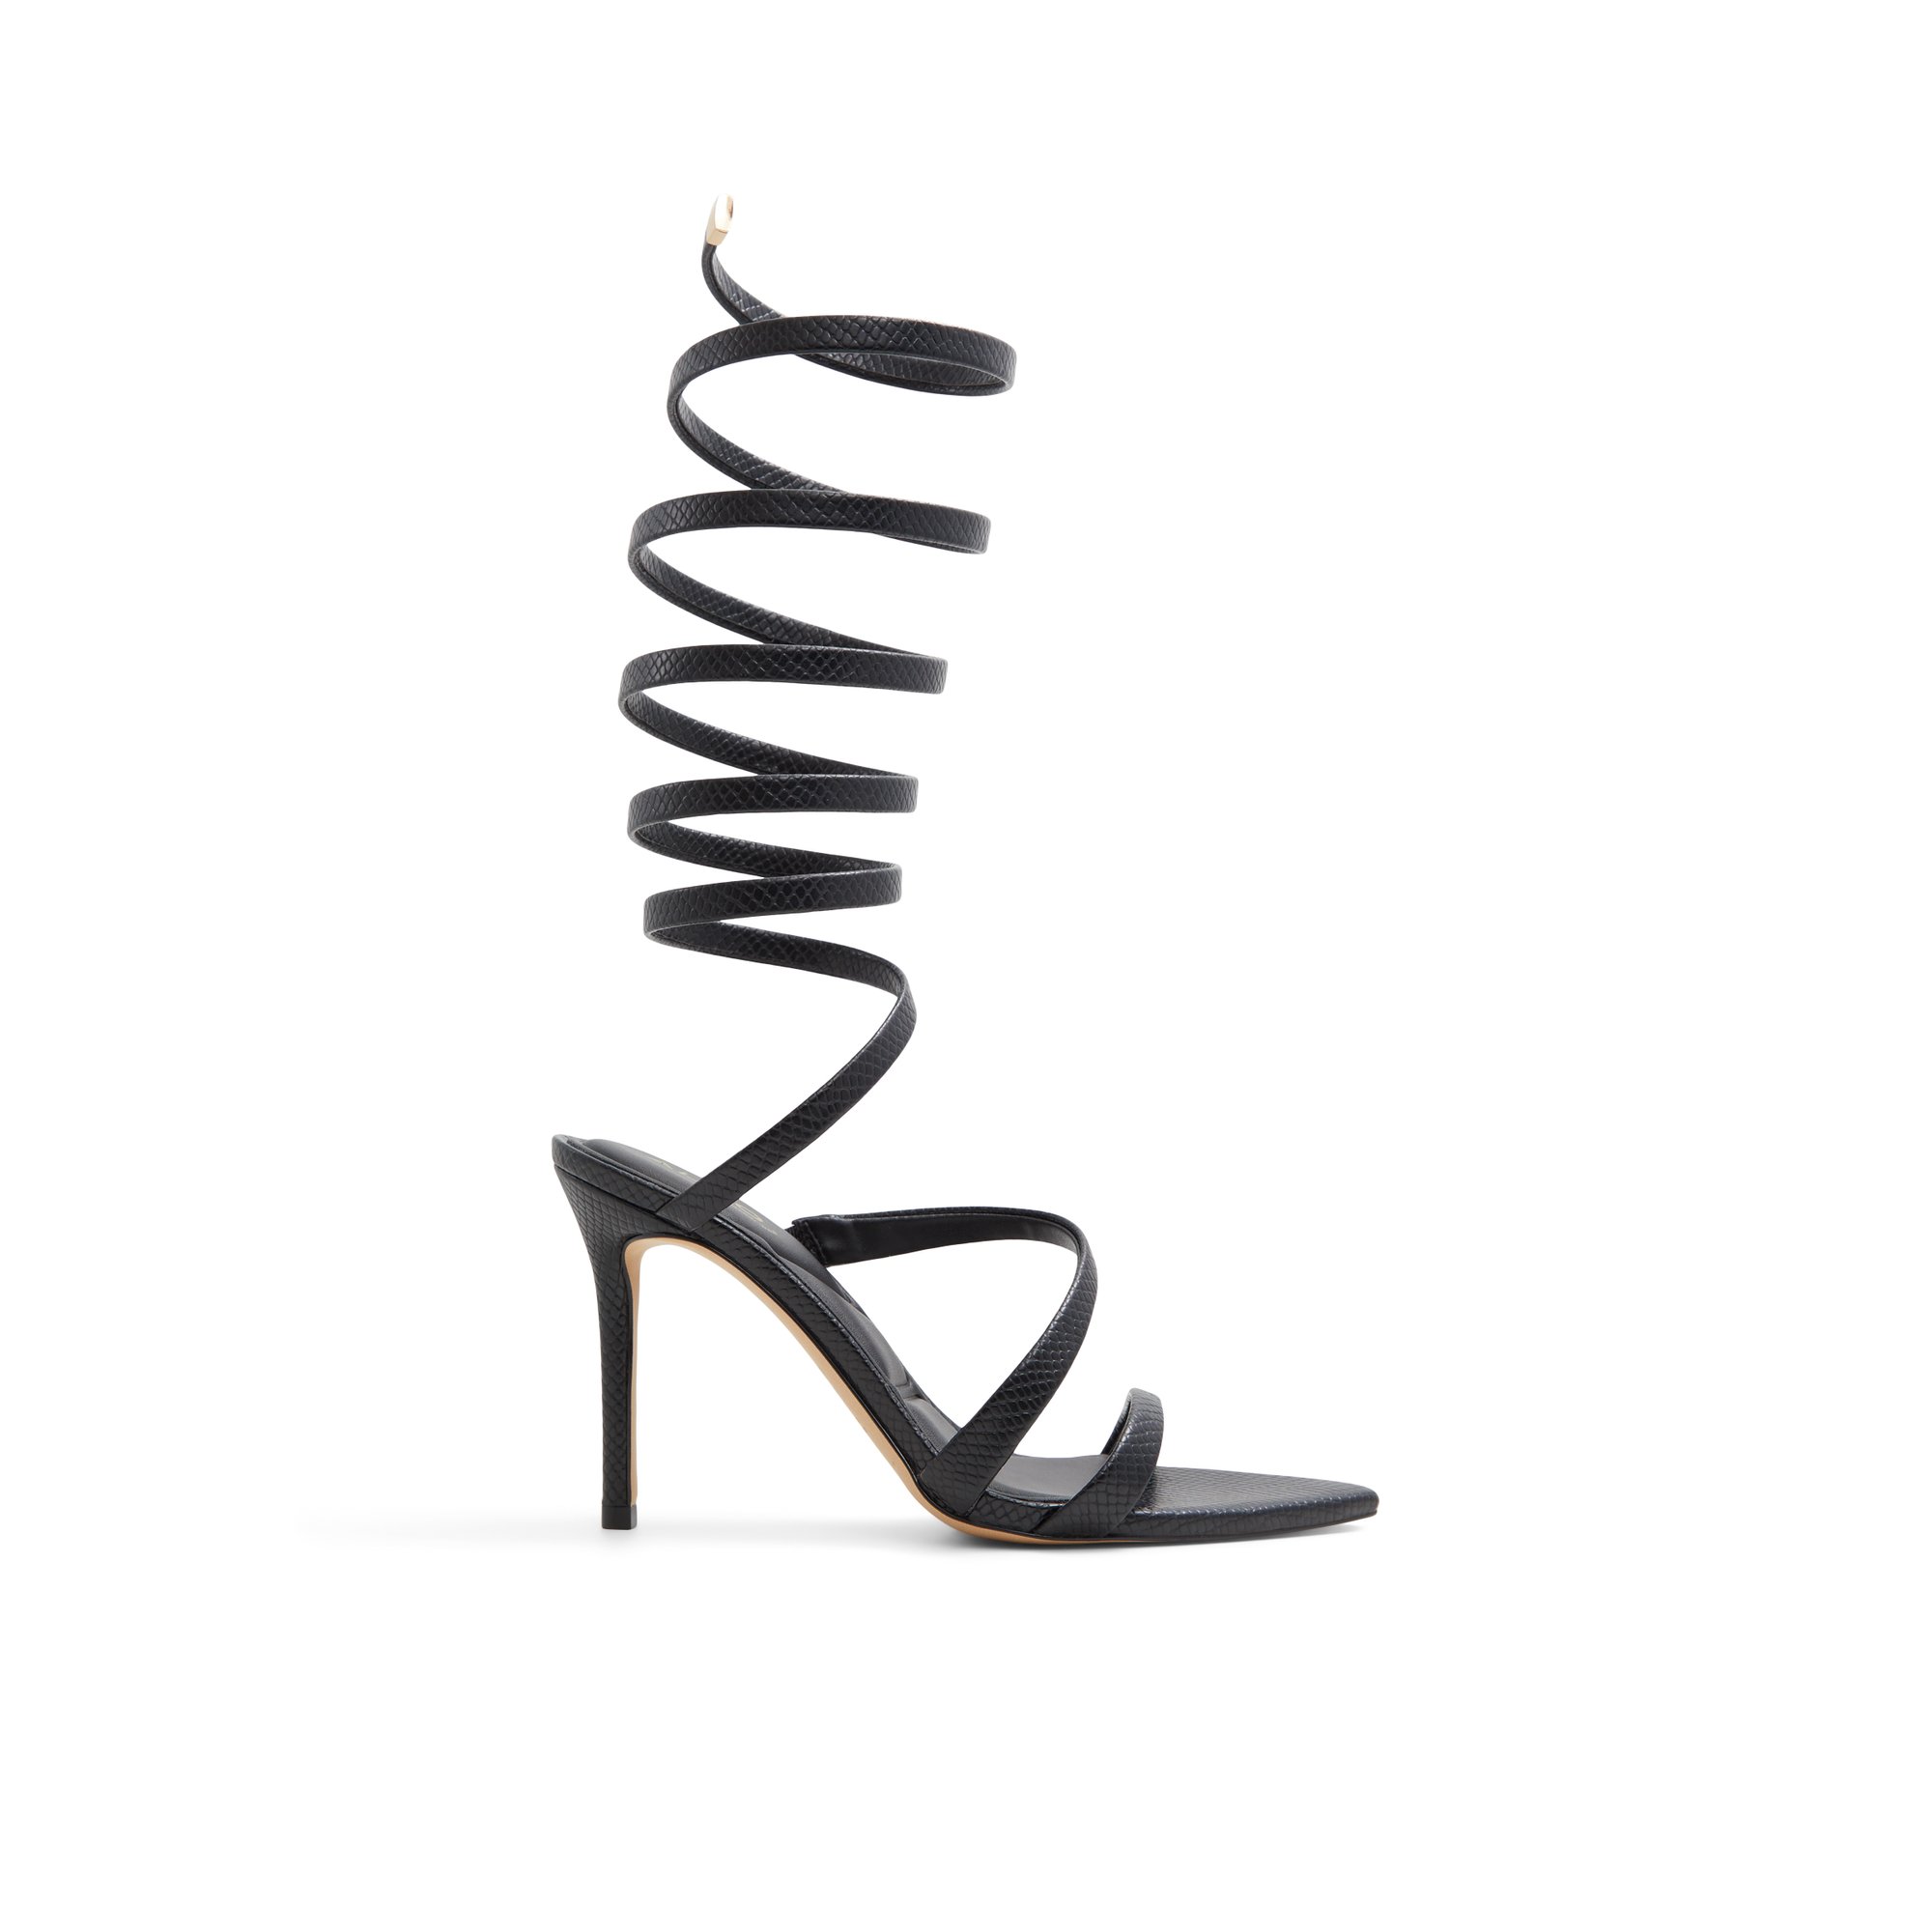 ALDO Spira - Women's Strappy Sandal Sandals - Black